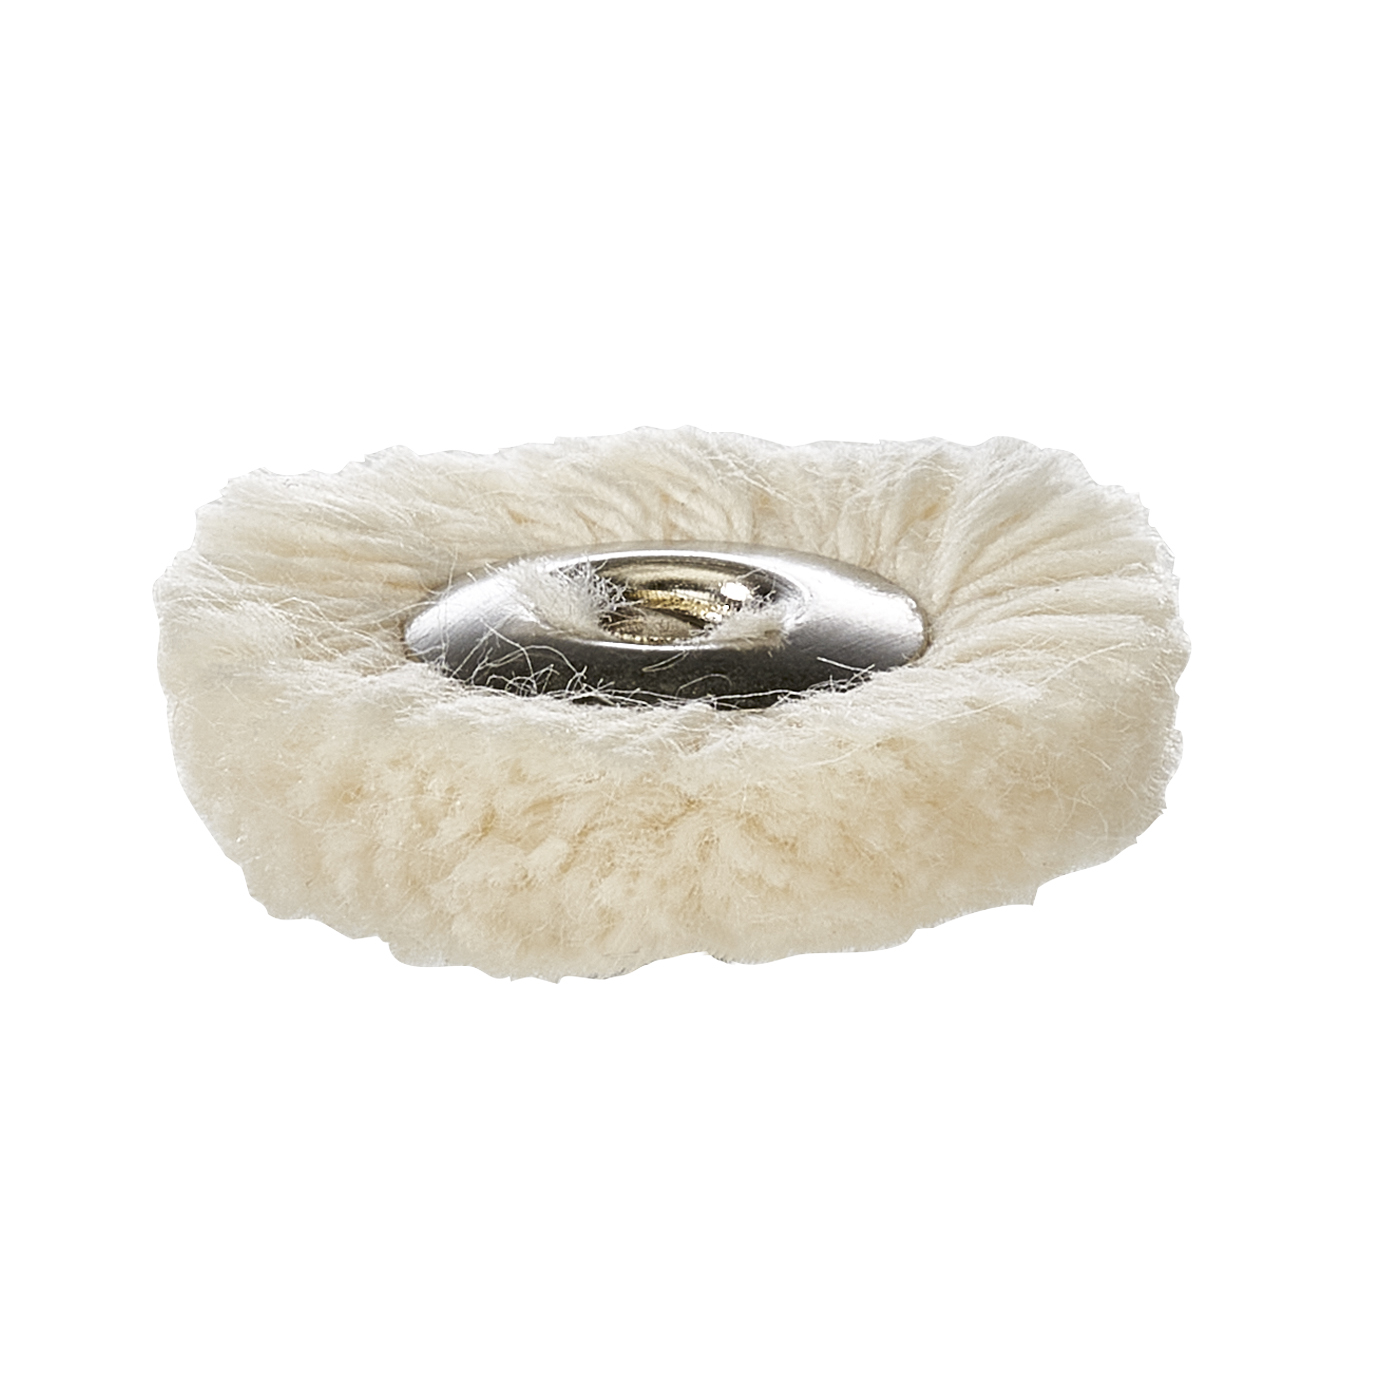 Polirapid polishing buffs, cotton yarn, white, ø 19 mm - 6 pieces